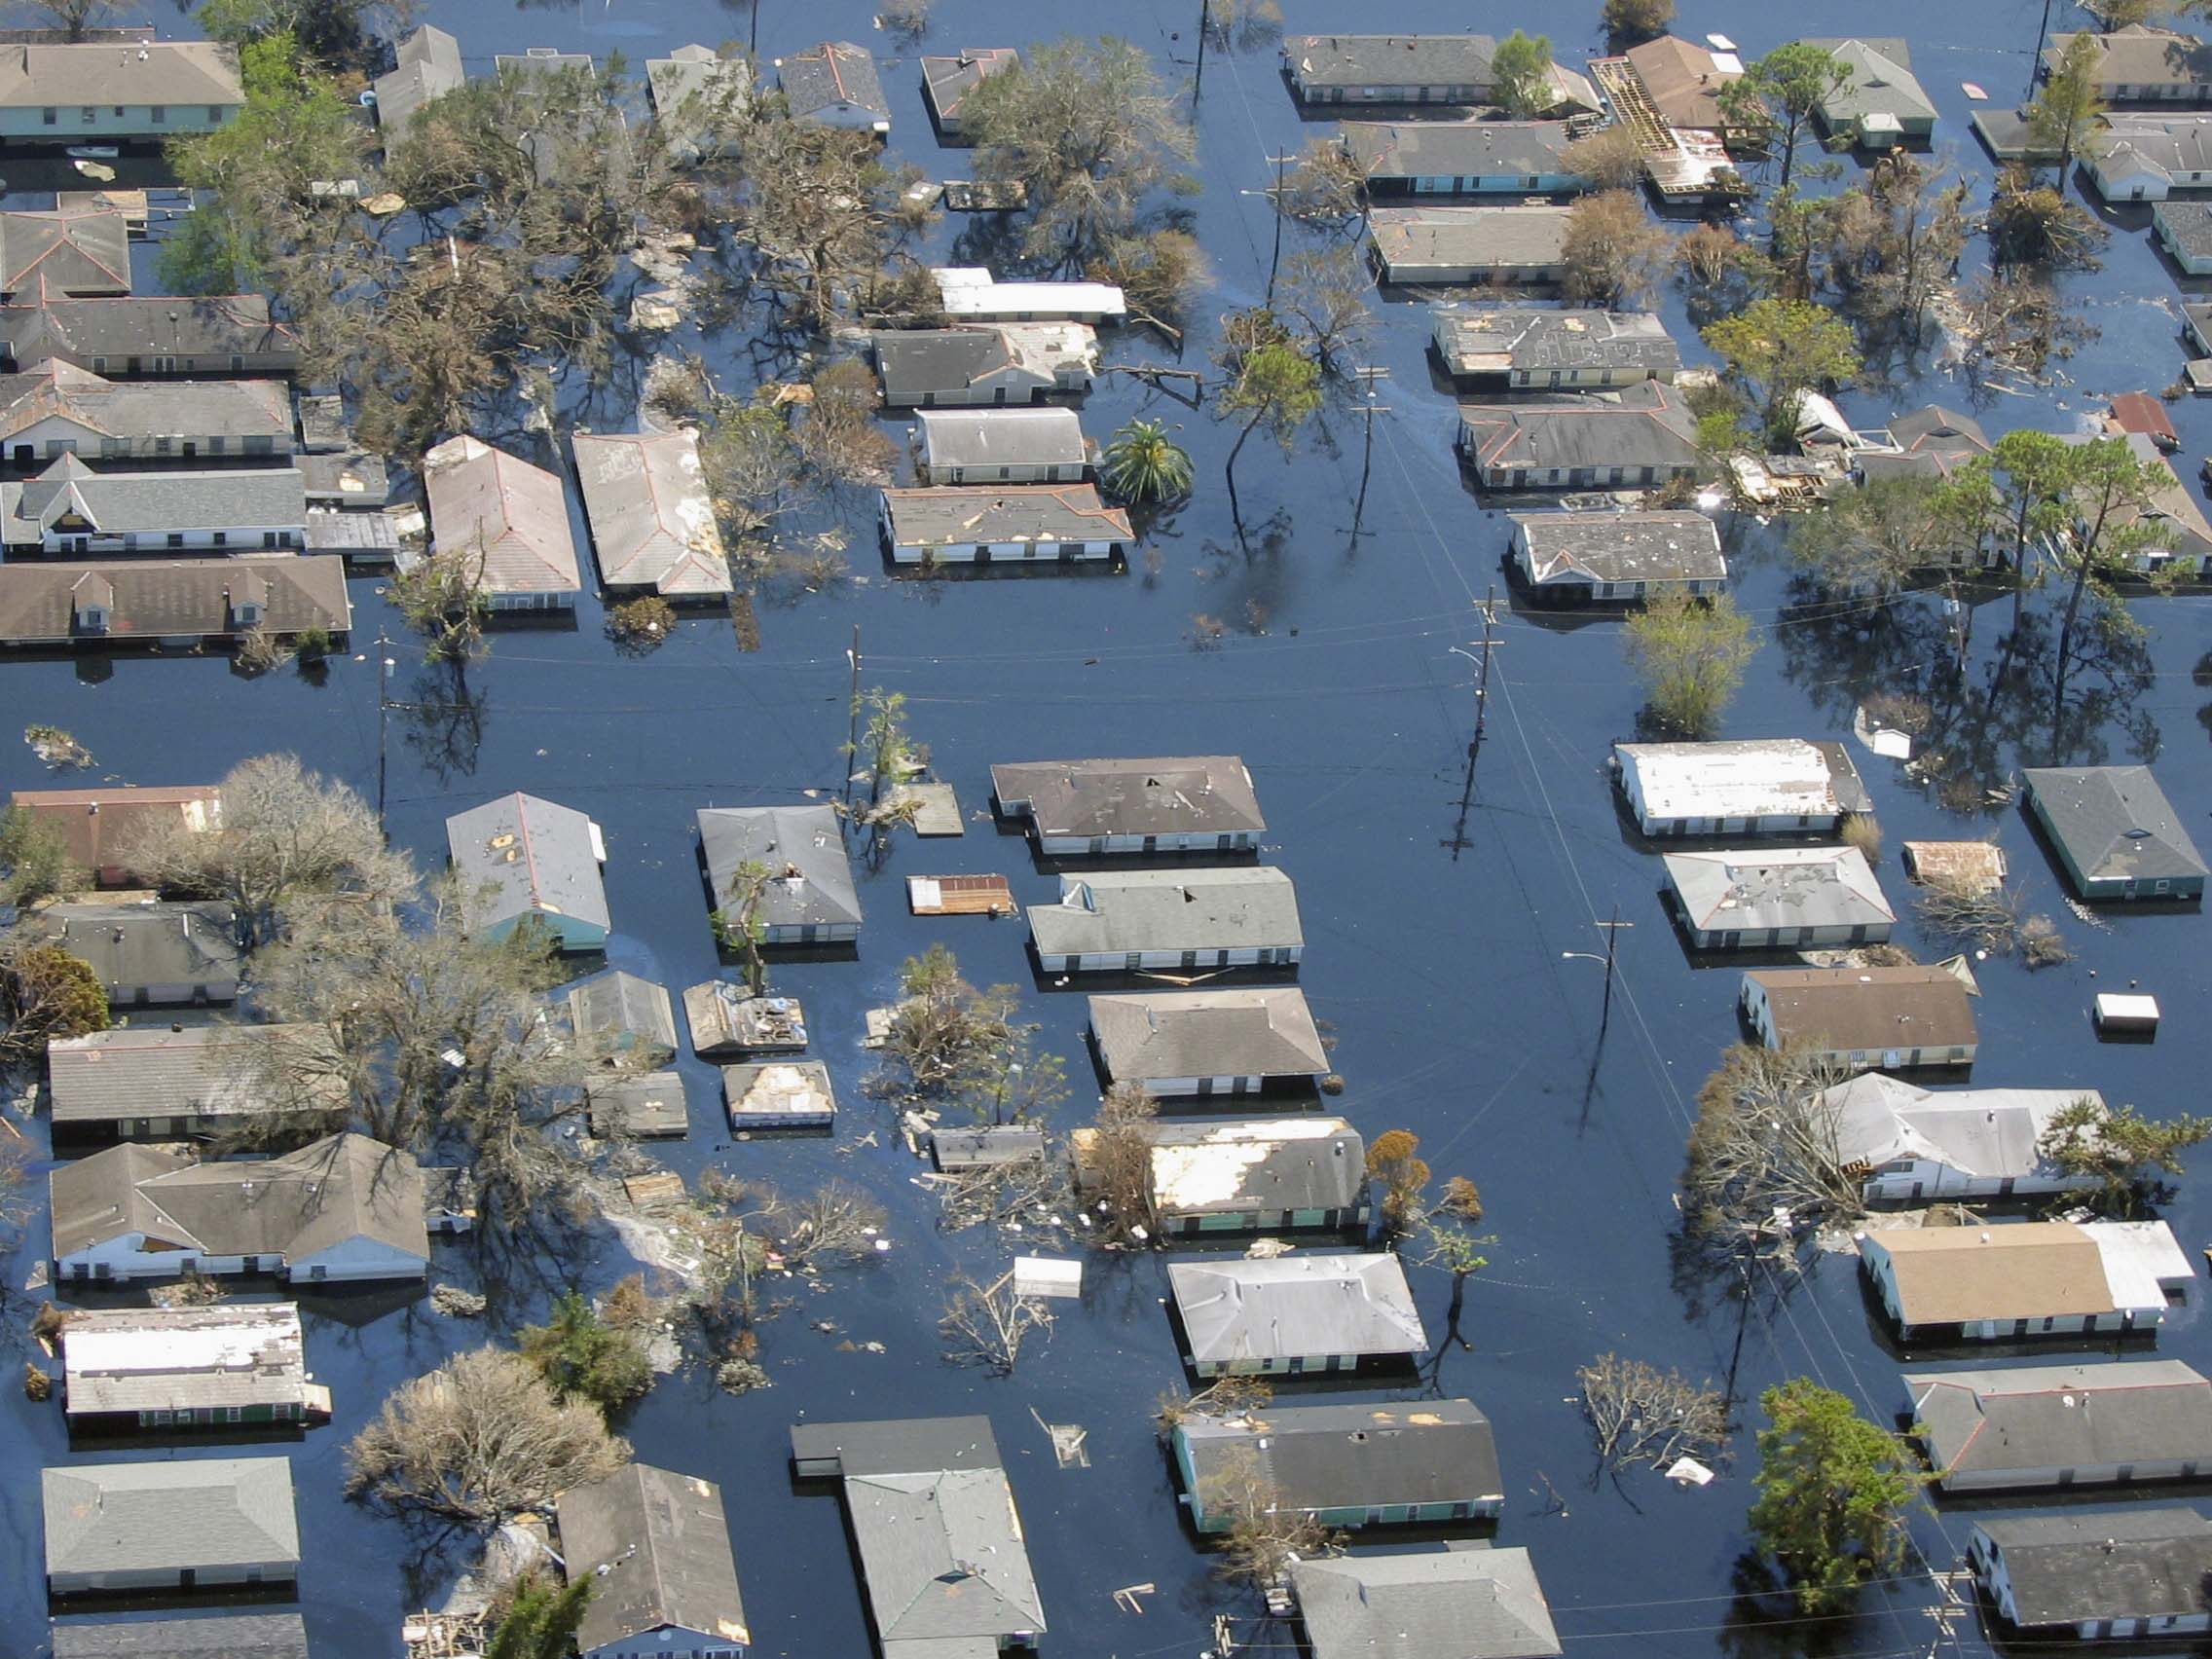 Hurrricane Katrina - A Brief Look At Tomorrow